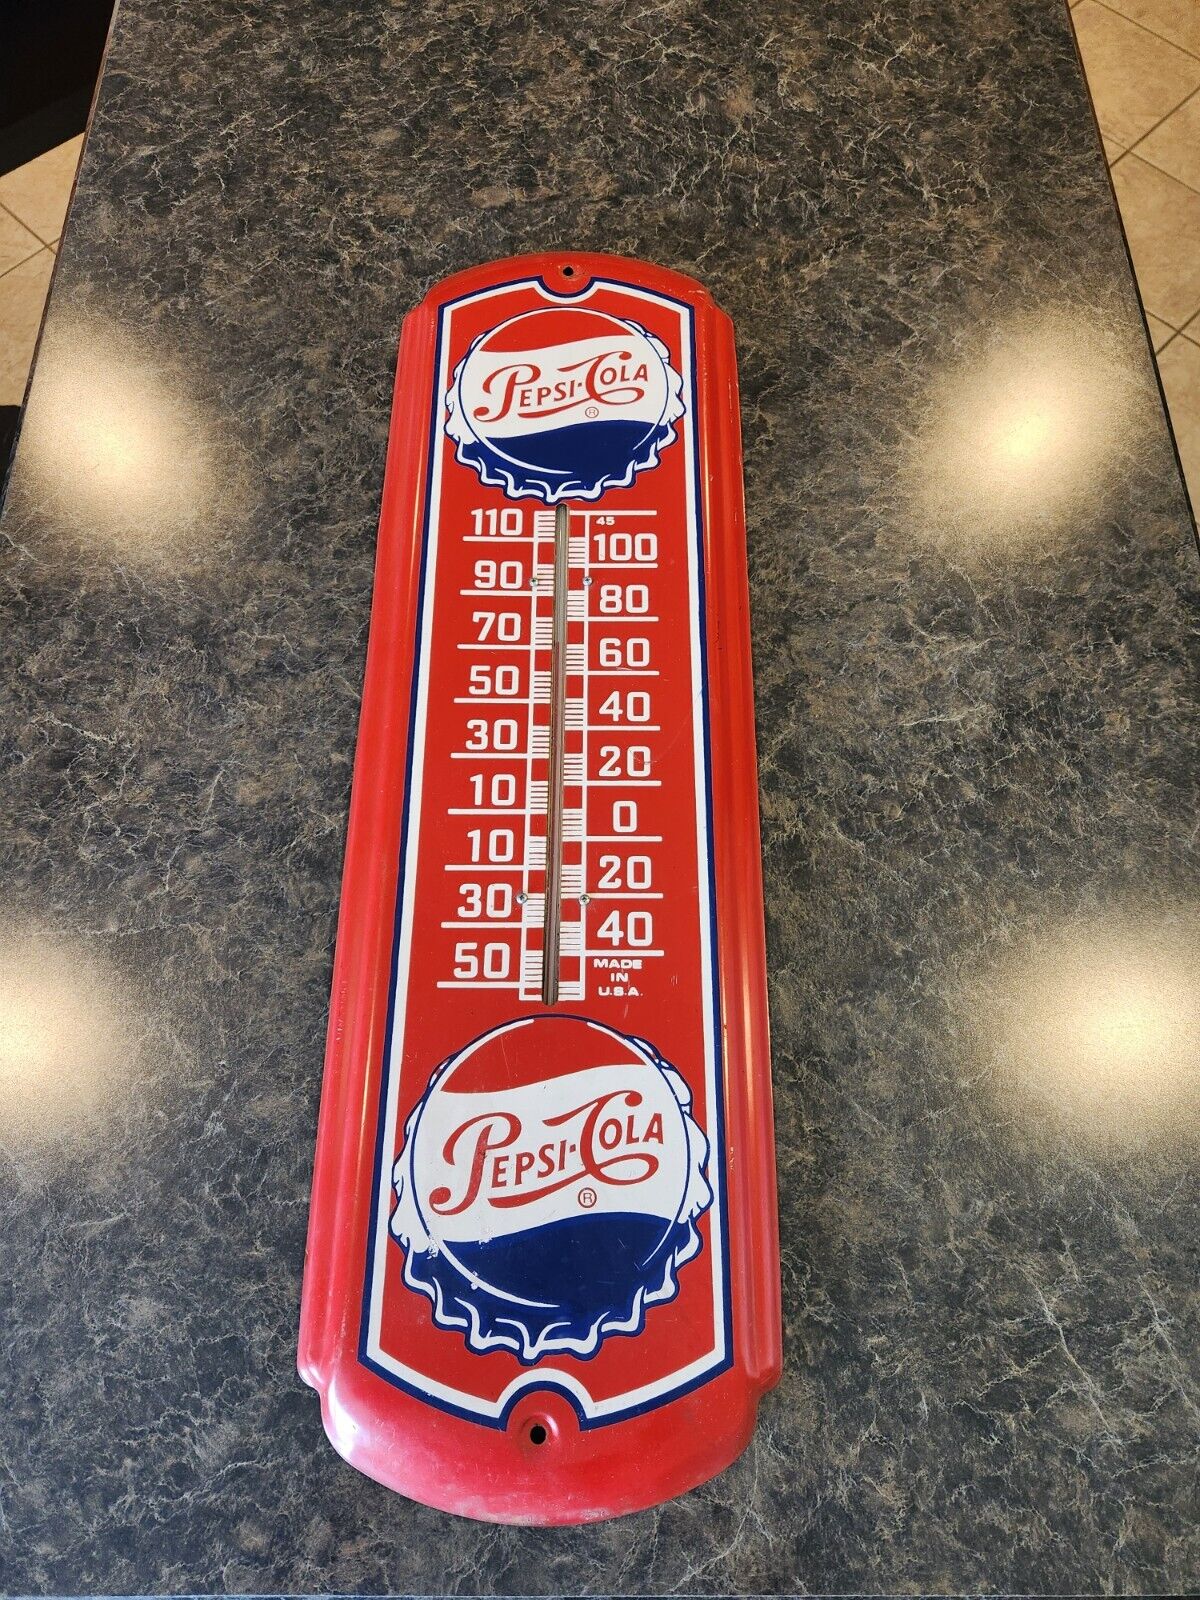 1980s Vintage Retro Pepsi Cola Soda Bottle Cap Advertising Soda Thermometer Sign